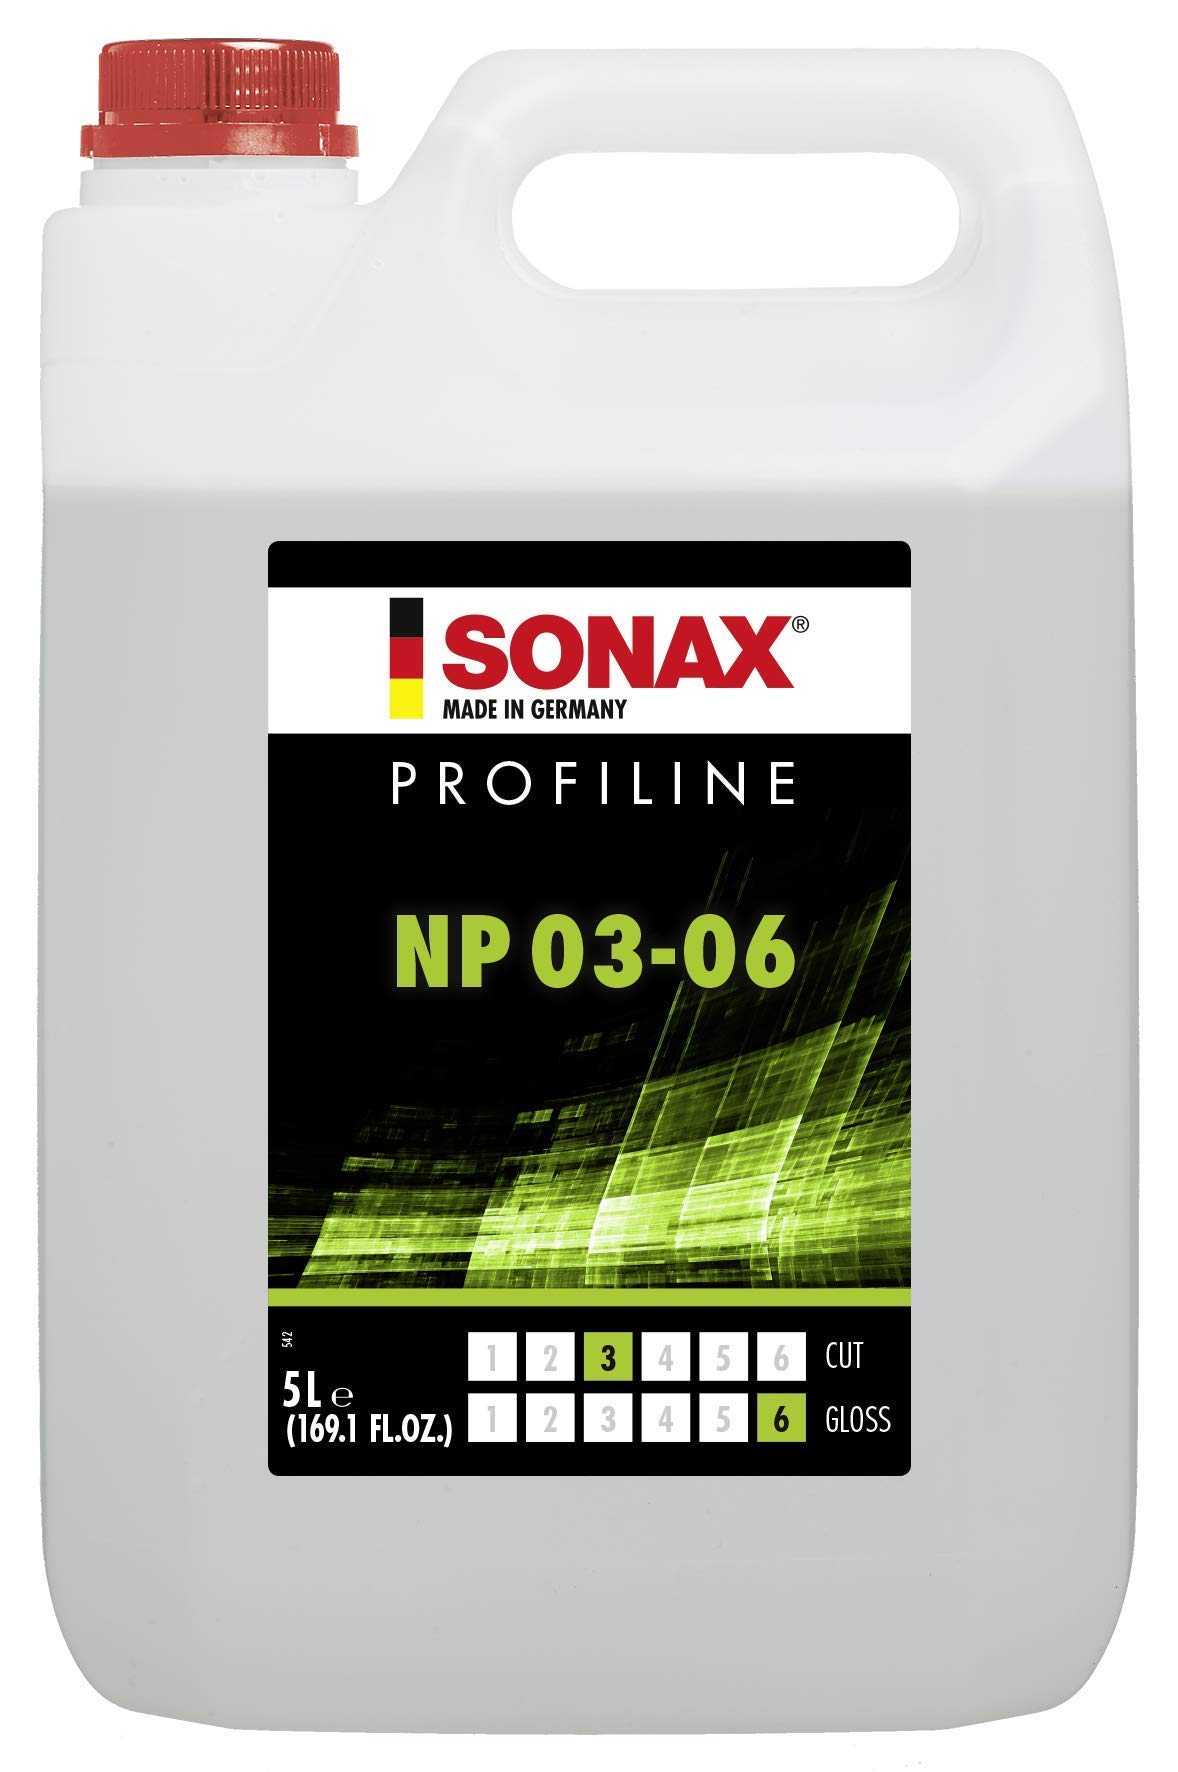 Sonax PROFILINE NP 03-06 5 l von SONAX